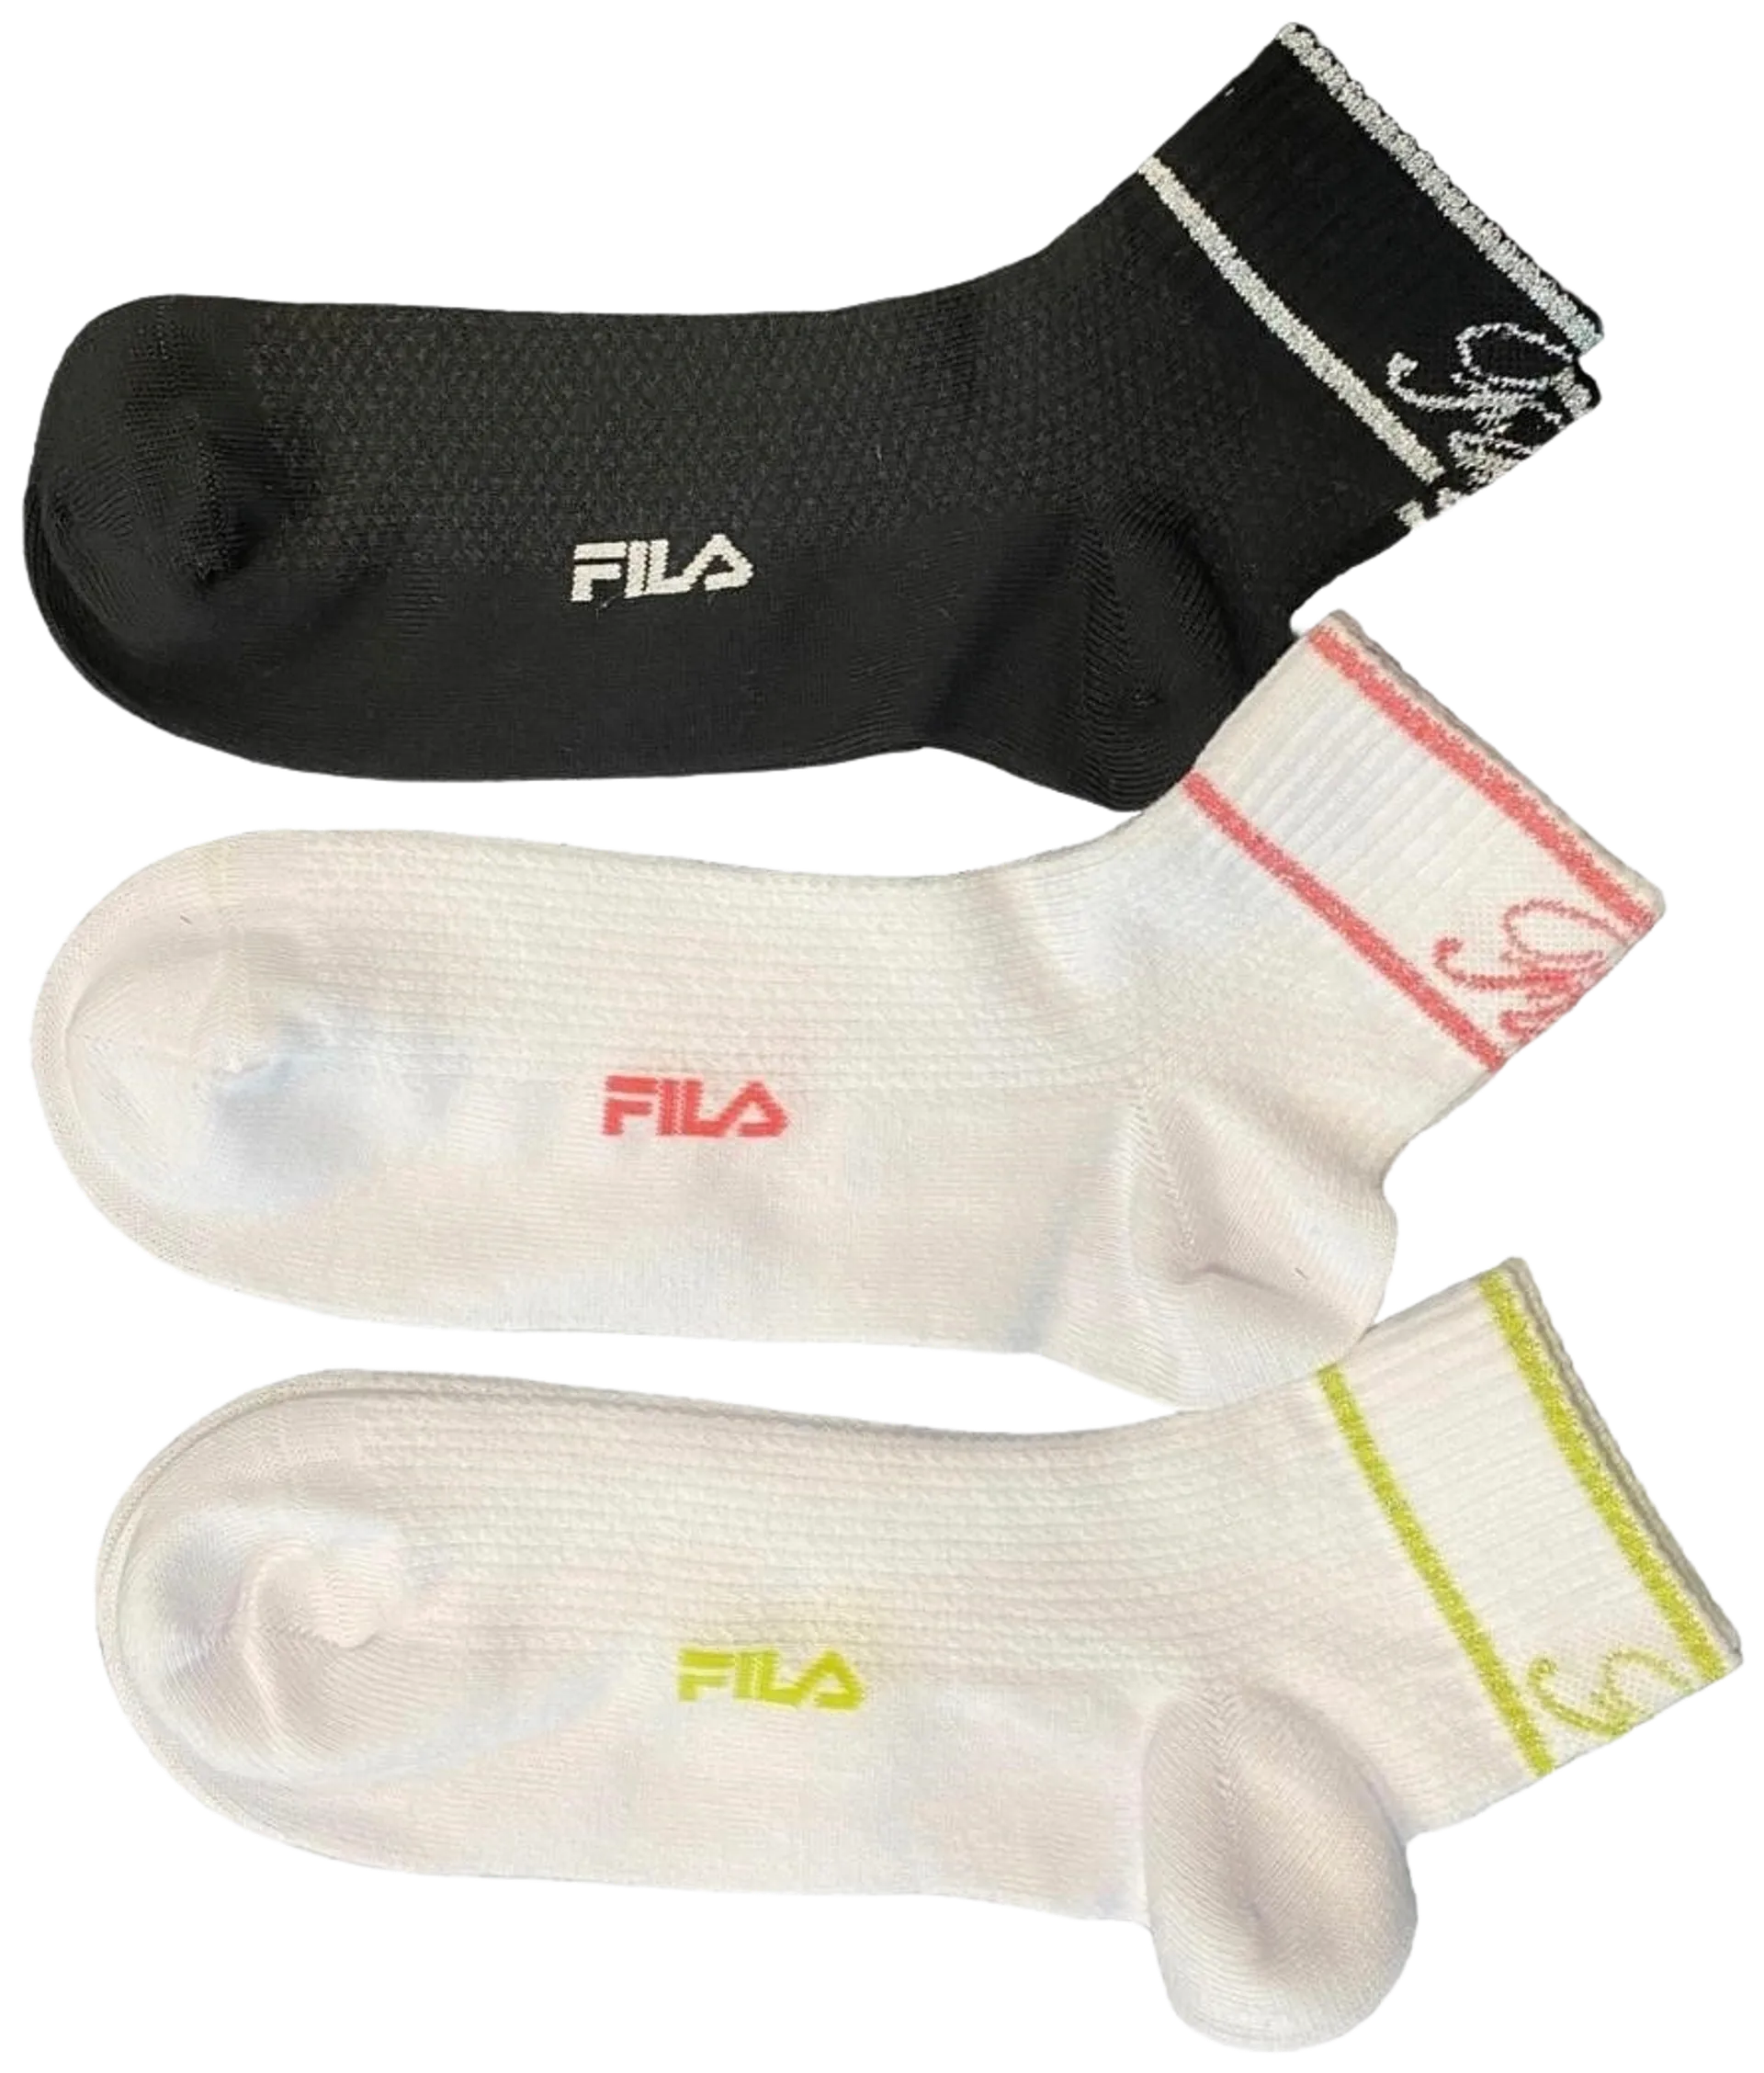 Fila naisten quarter sukat 3-pack F6941/3 - Black/Acid/Fuxia